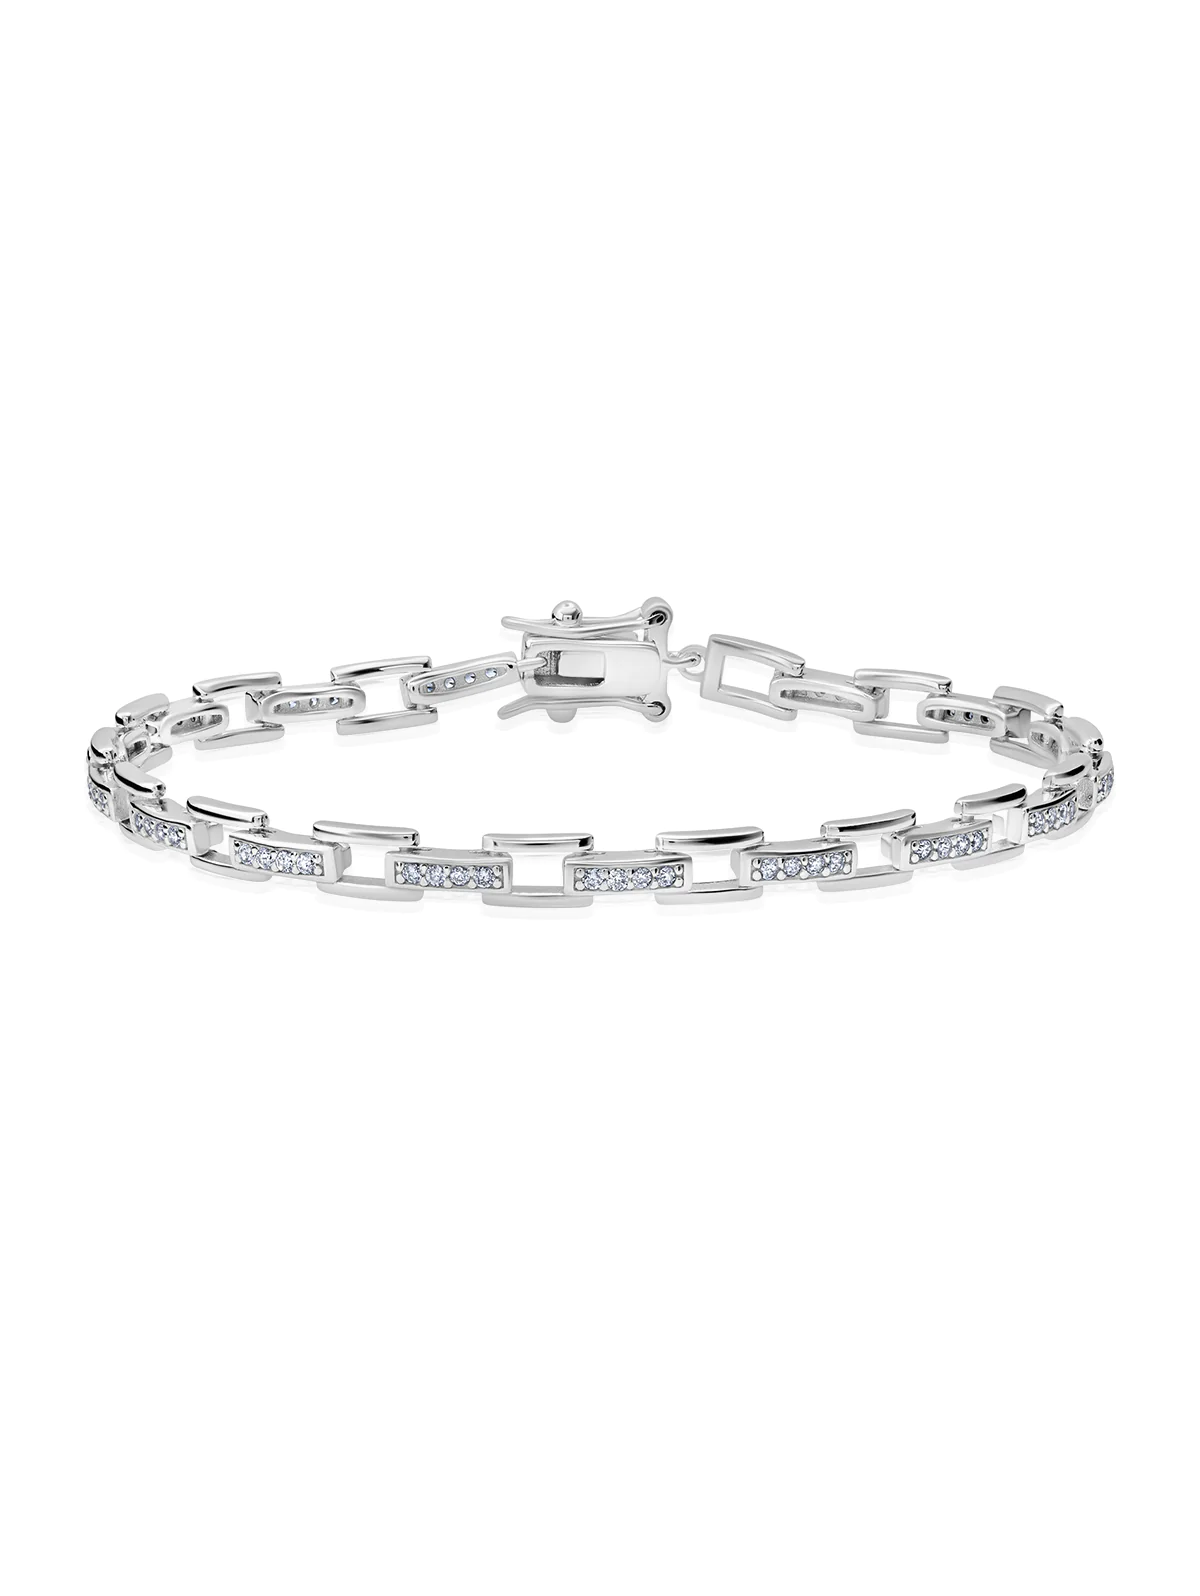 Primary image for Authentic Crislu Pave Rectangle Link Bracelet in Platinum